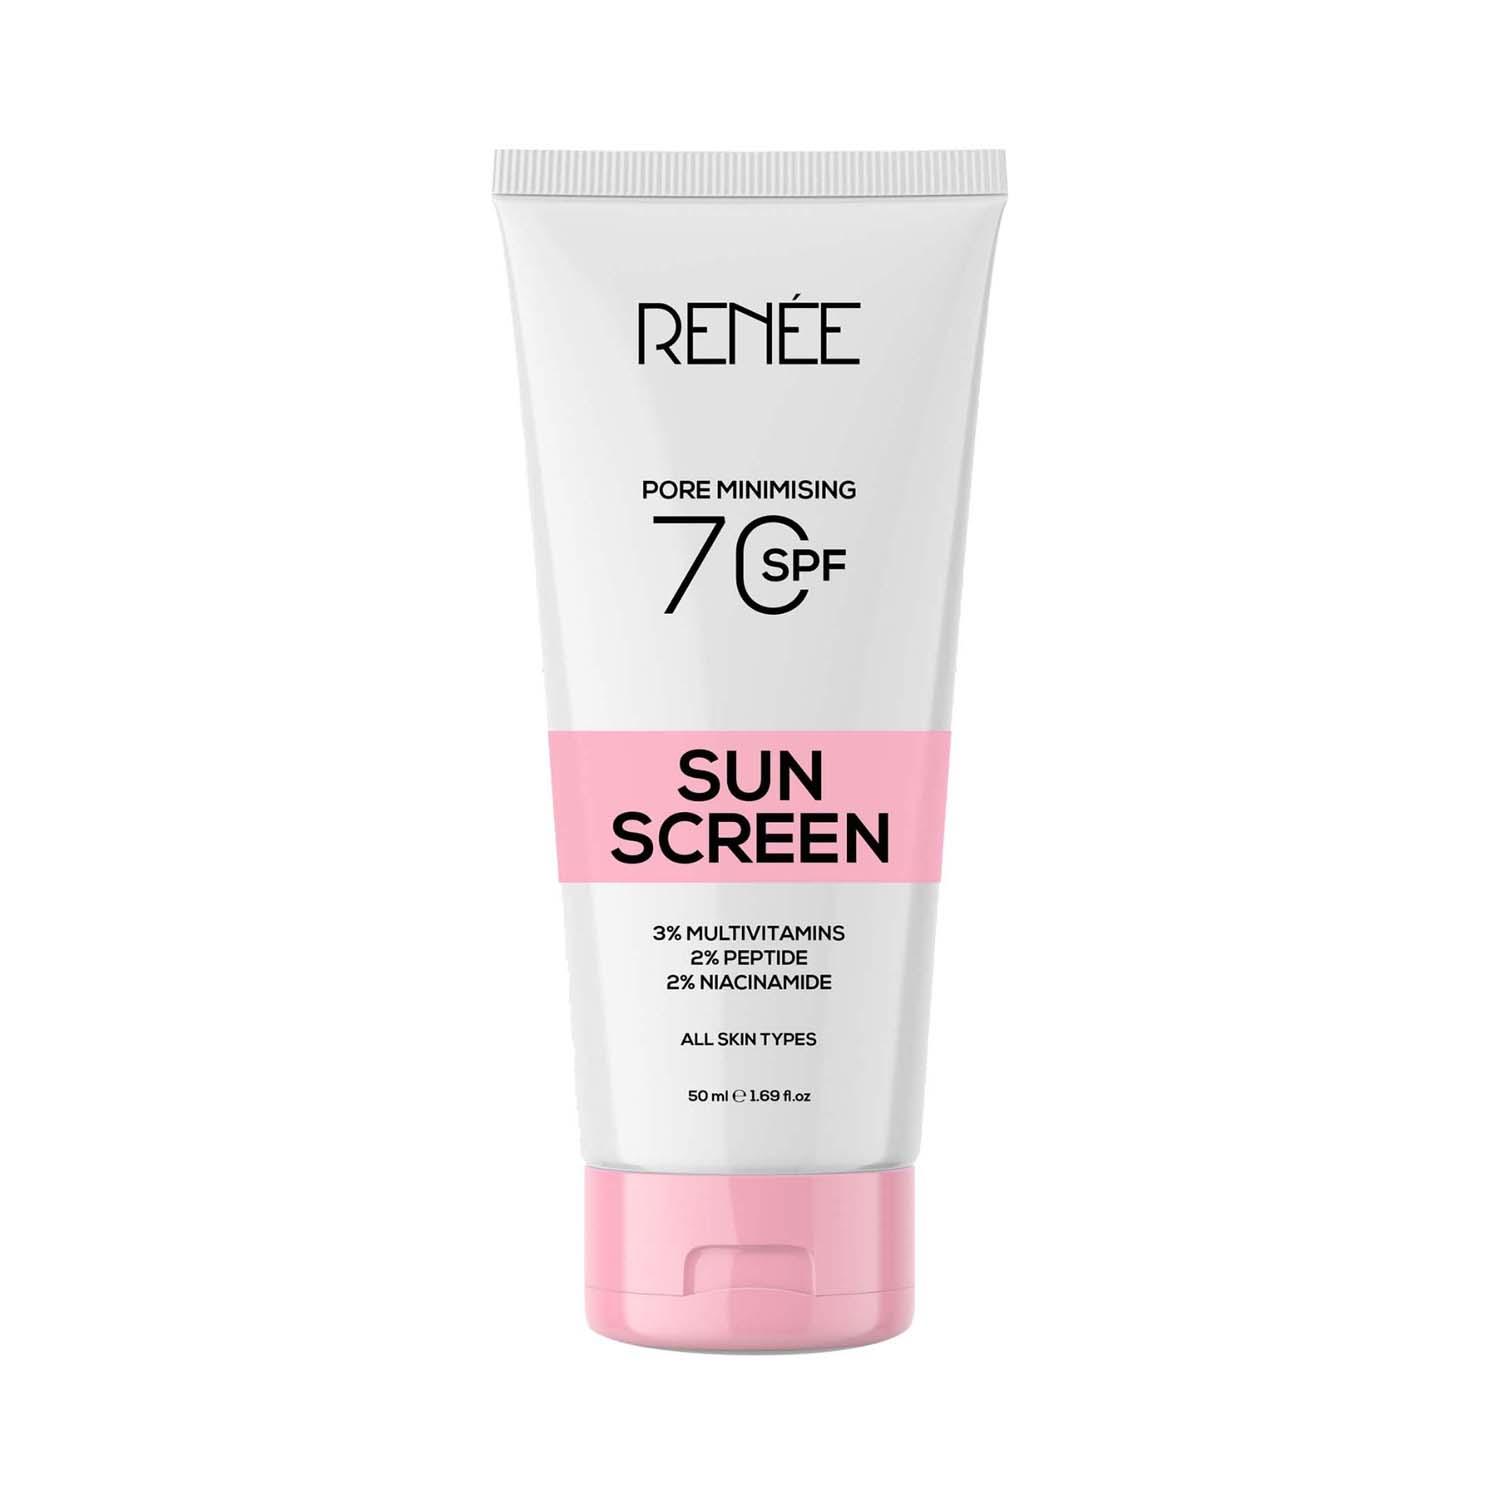 RENEE | RENEE Pore Minimizing Sunscreen SPF 70 With 2% Niacinamide, 2% Peptide & 3% Multivitamins (5 ml)